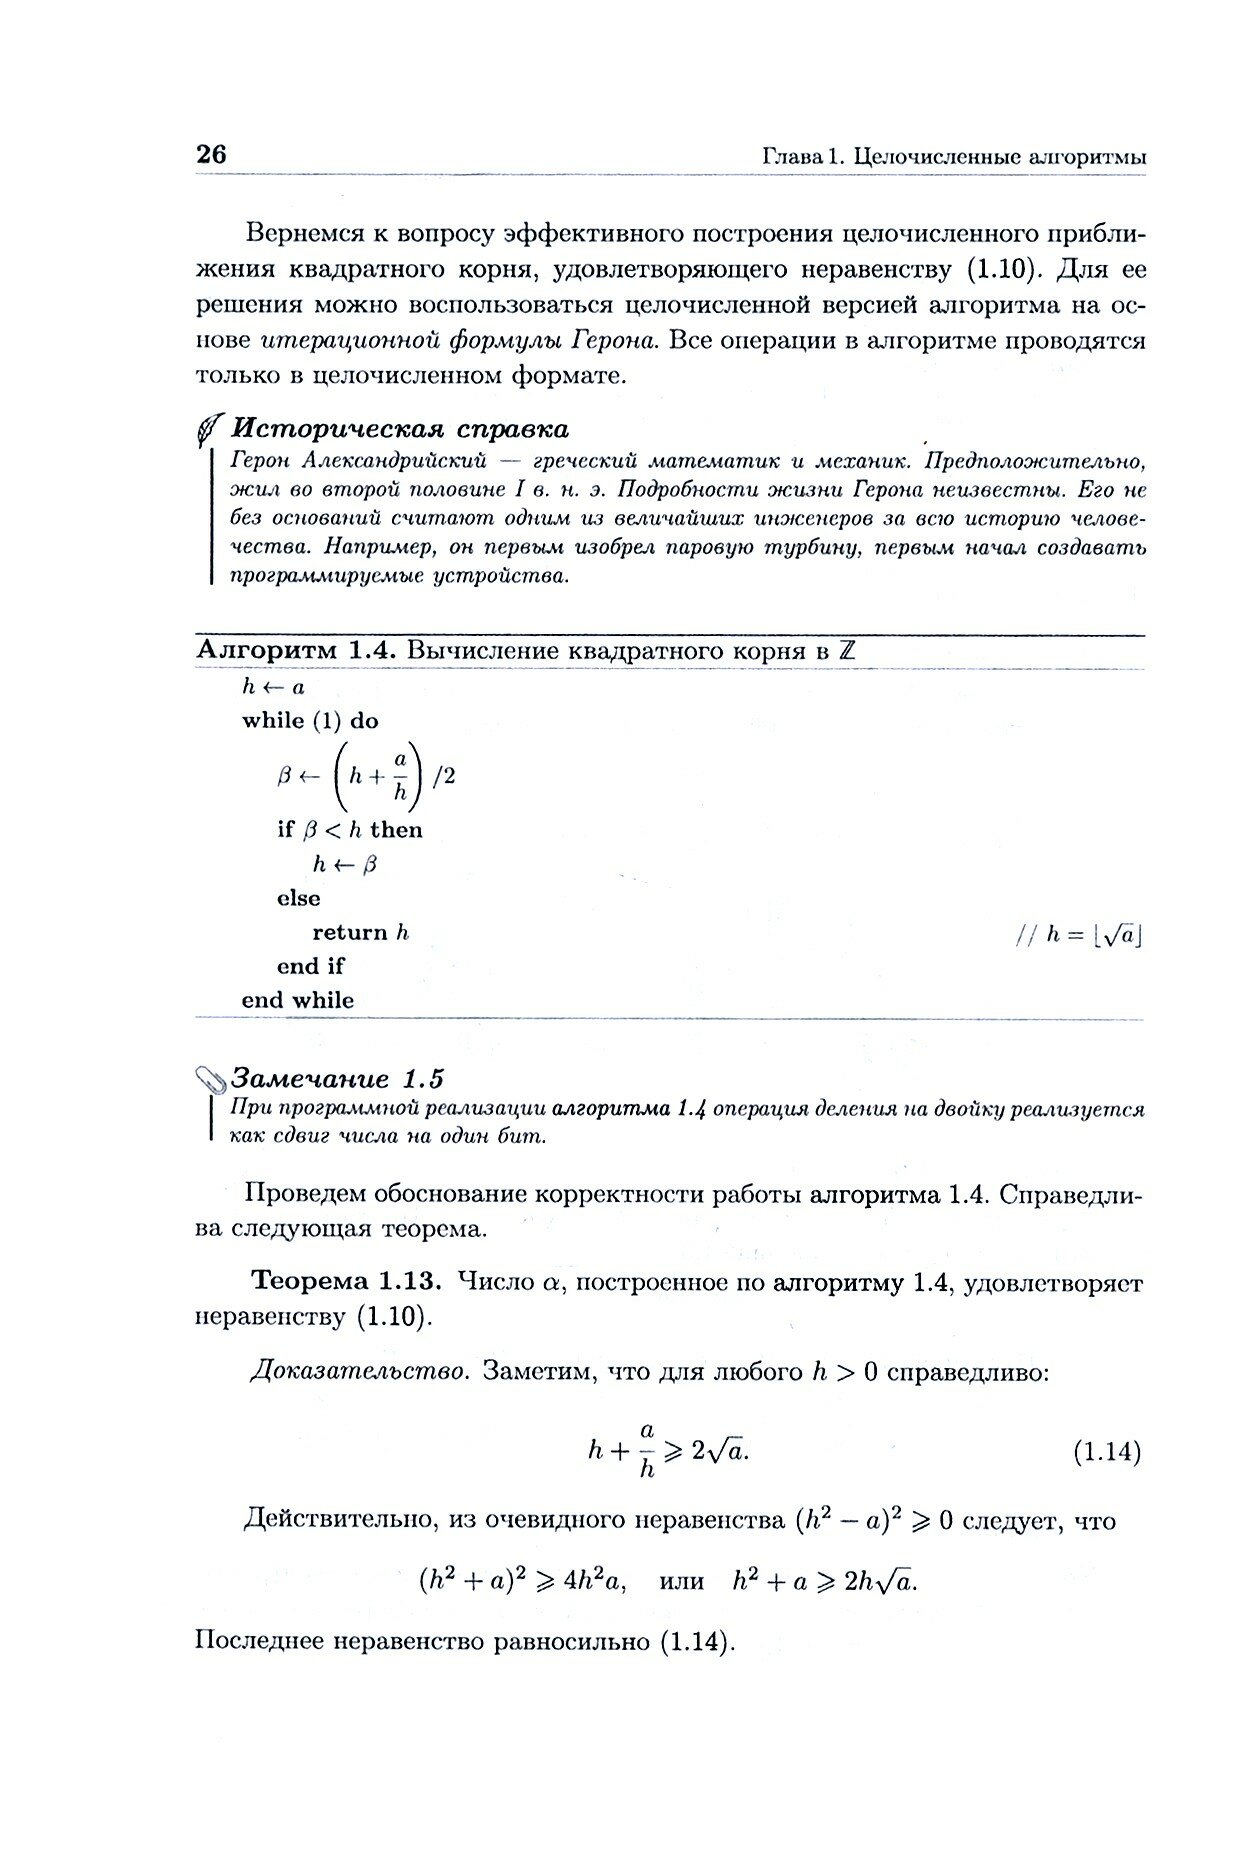 Дискретная математика и информатика учебник для вузов - фото №4